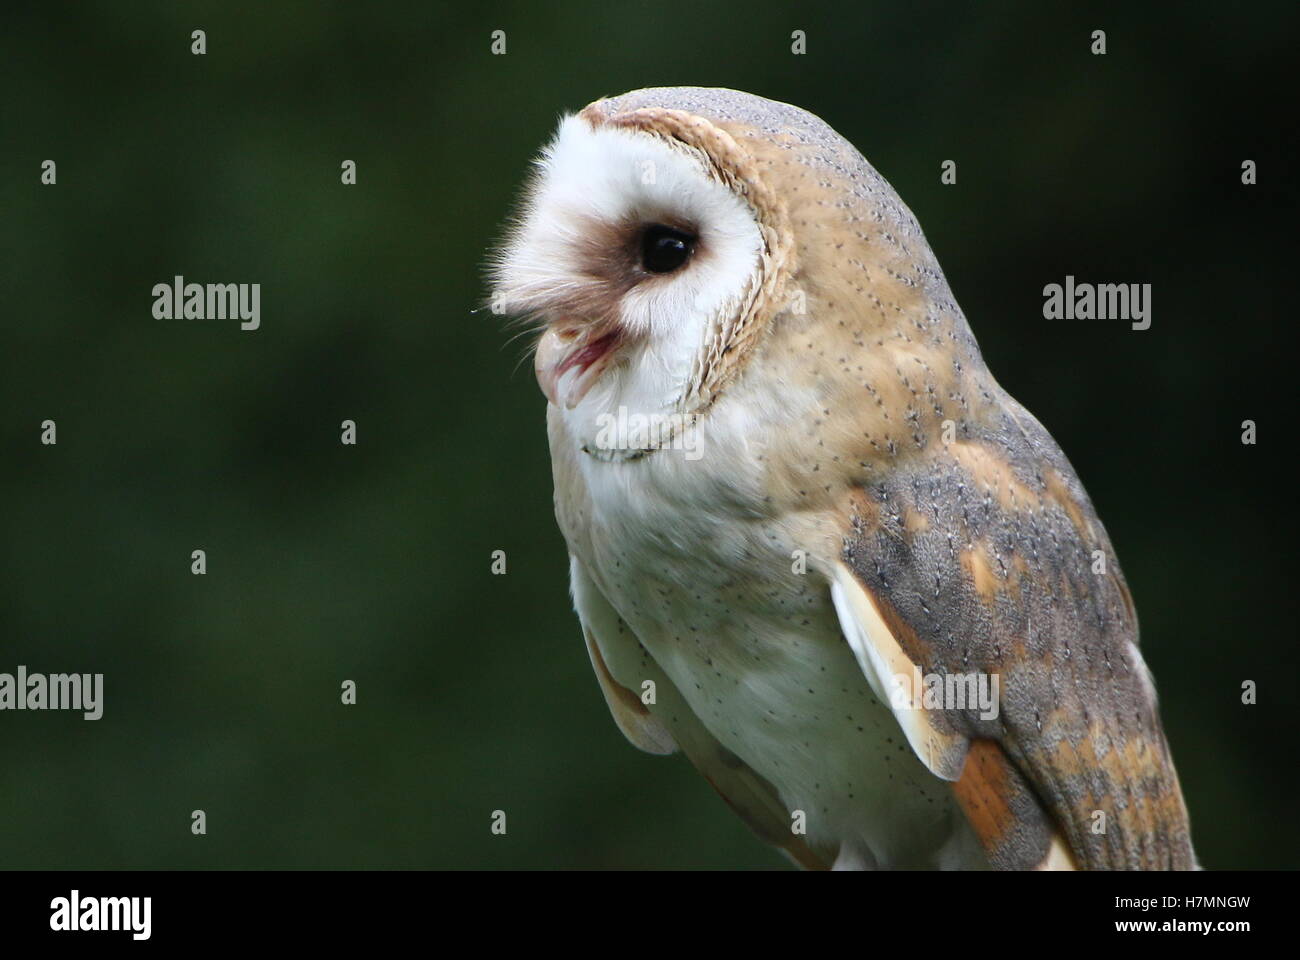 European Barn owl (Tyto alba) in close-up while feeding Stock Photo